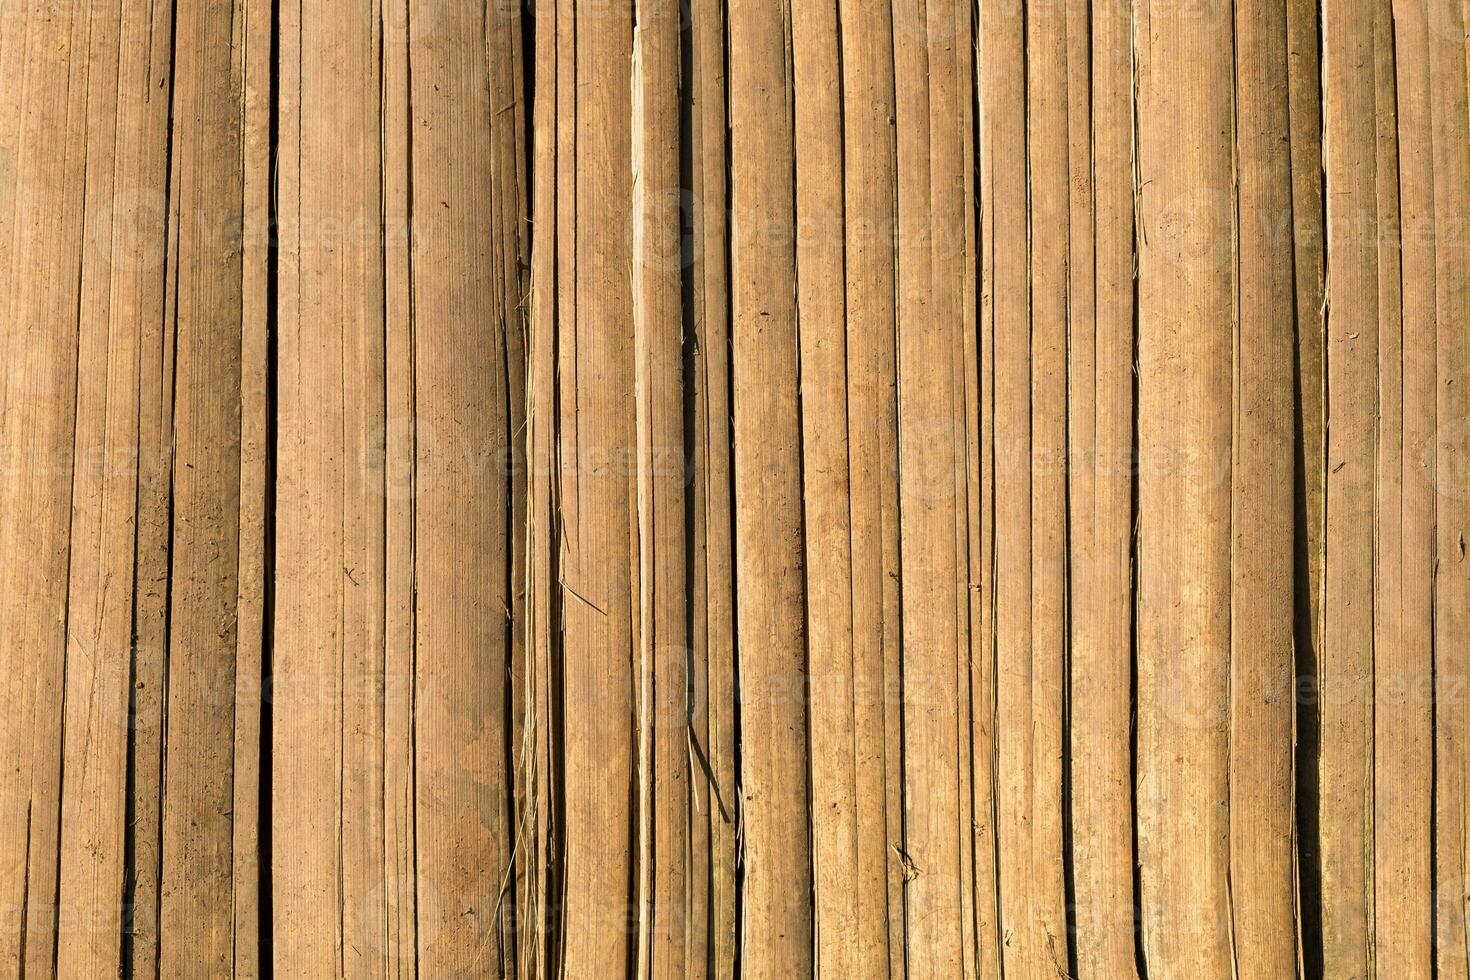 marron bambou bande clôture texture Contexte photo